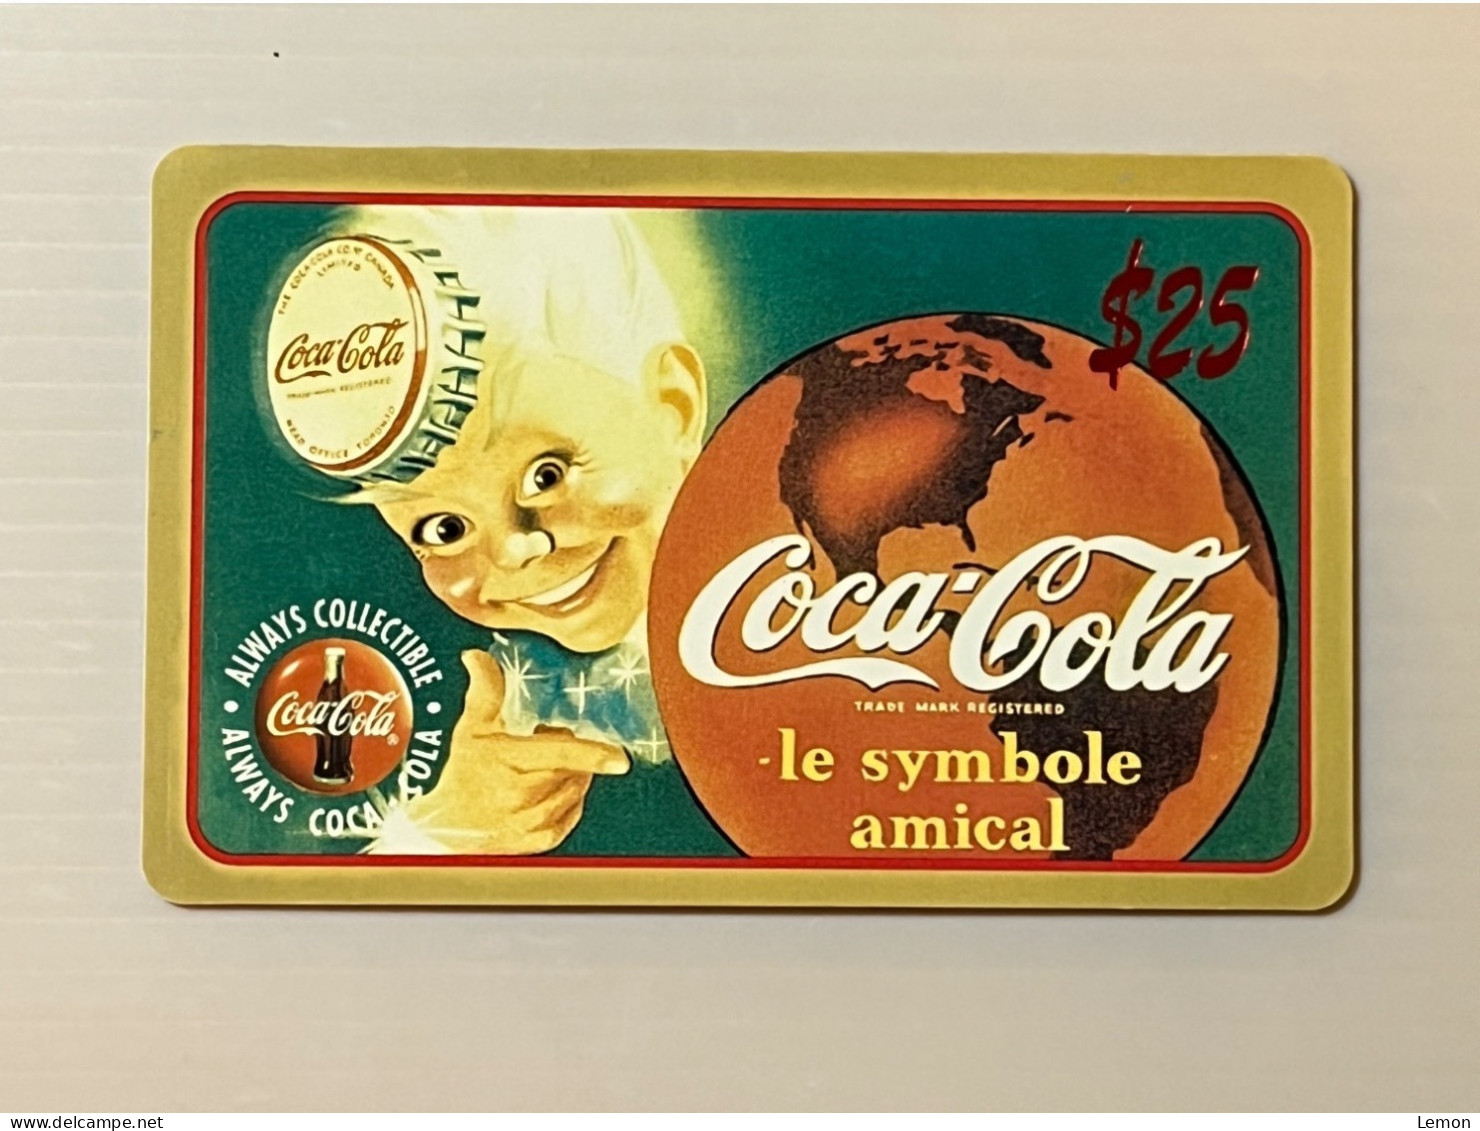 Mint USA UNITED STATES America Prepaid Telecard Phonecard, Coca Cola Boy $25 Card Gold Border, Set Of 1 Mint Card - Colecciones